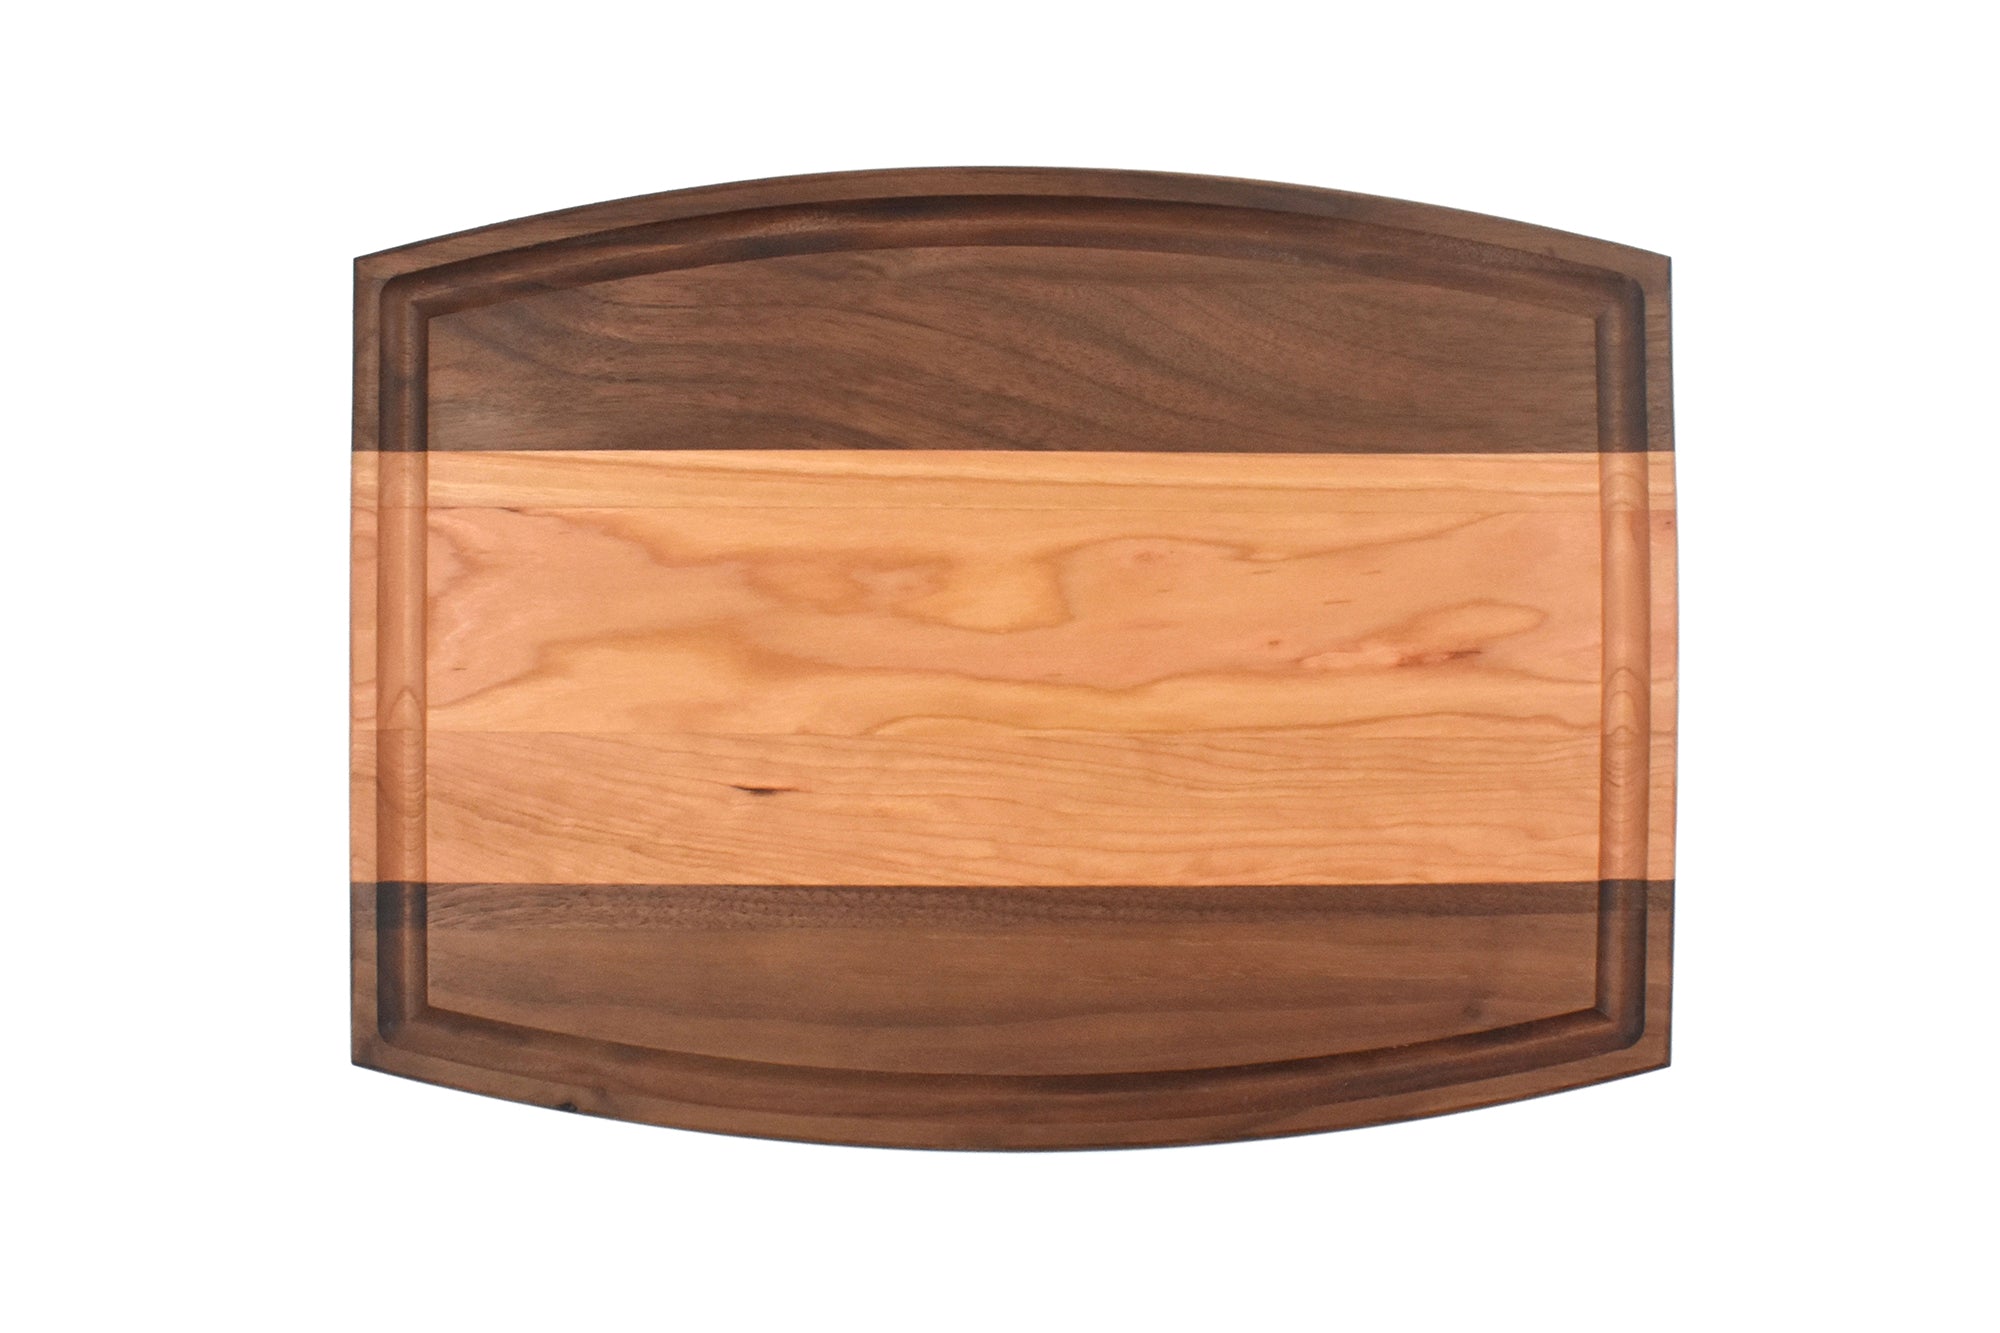 Arched Multi Wood Species Cutting Board